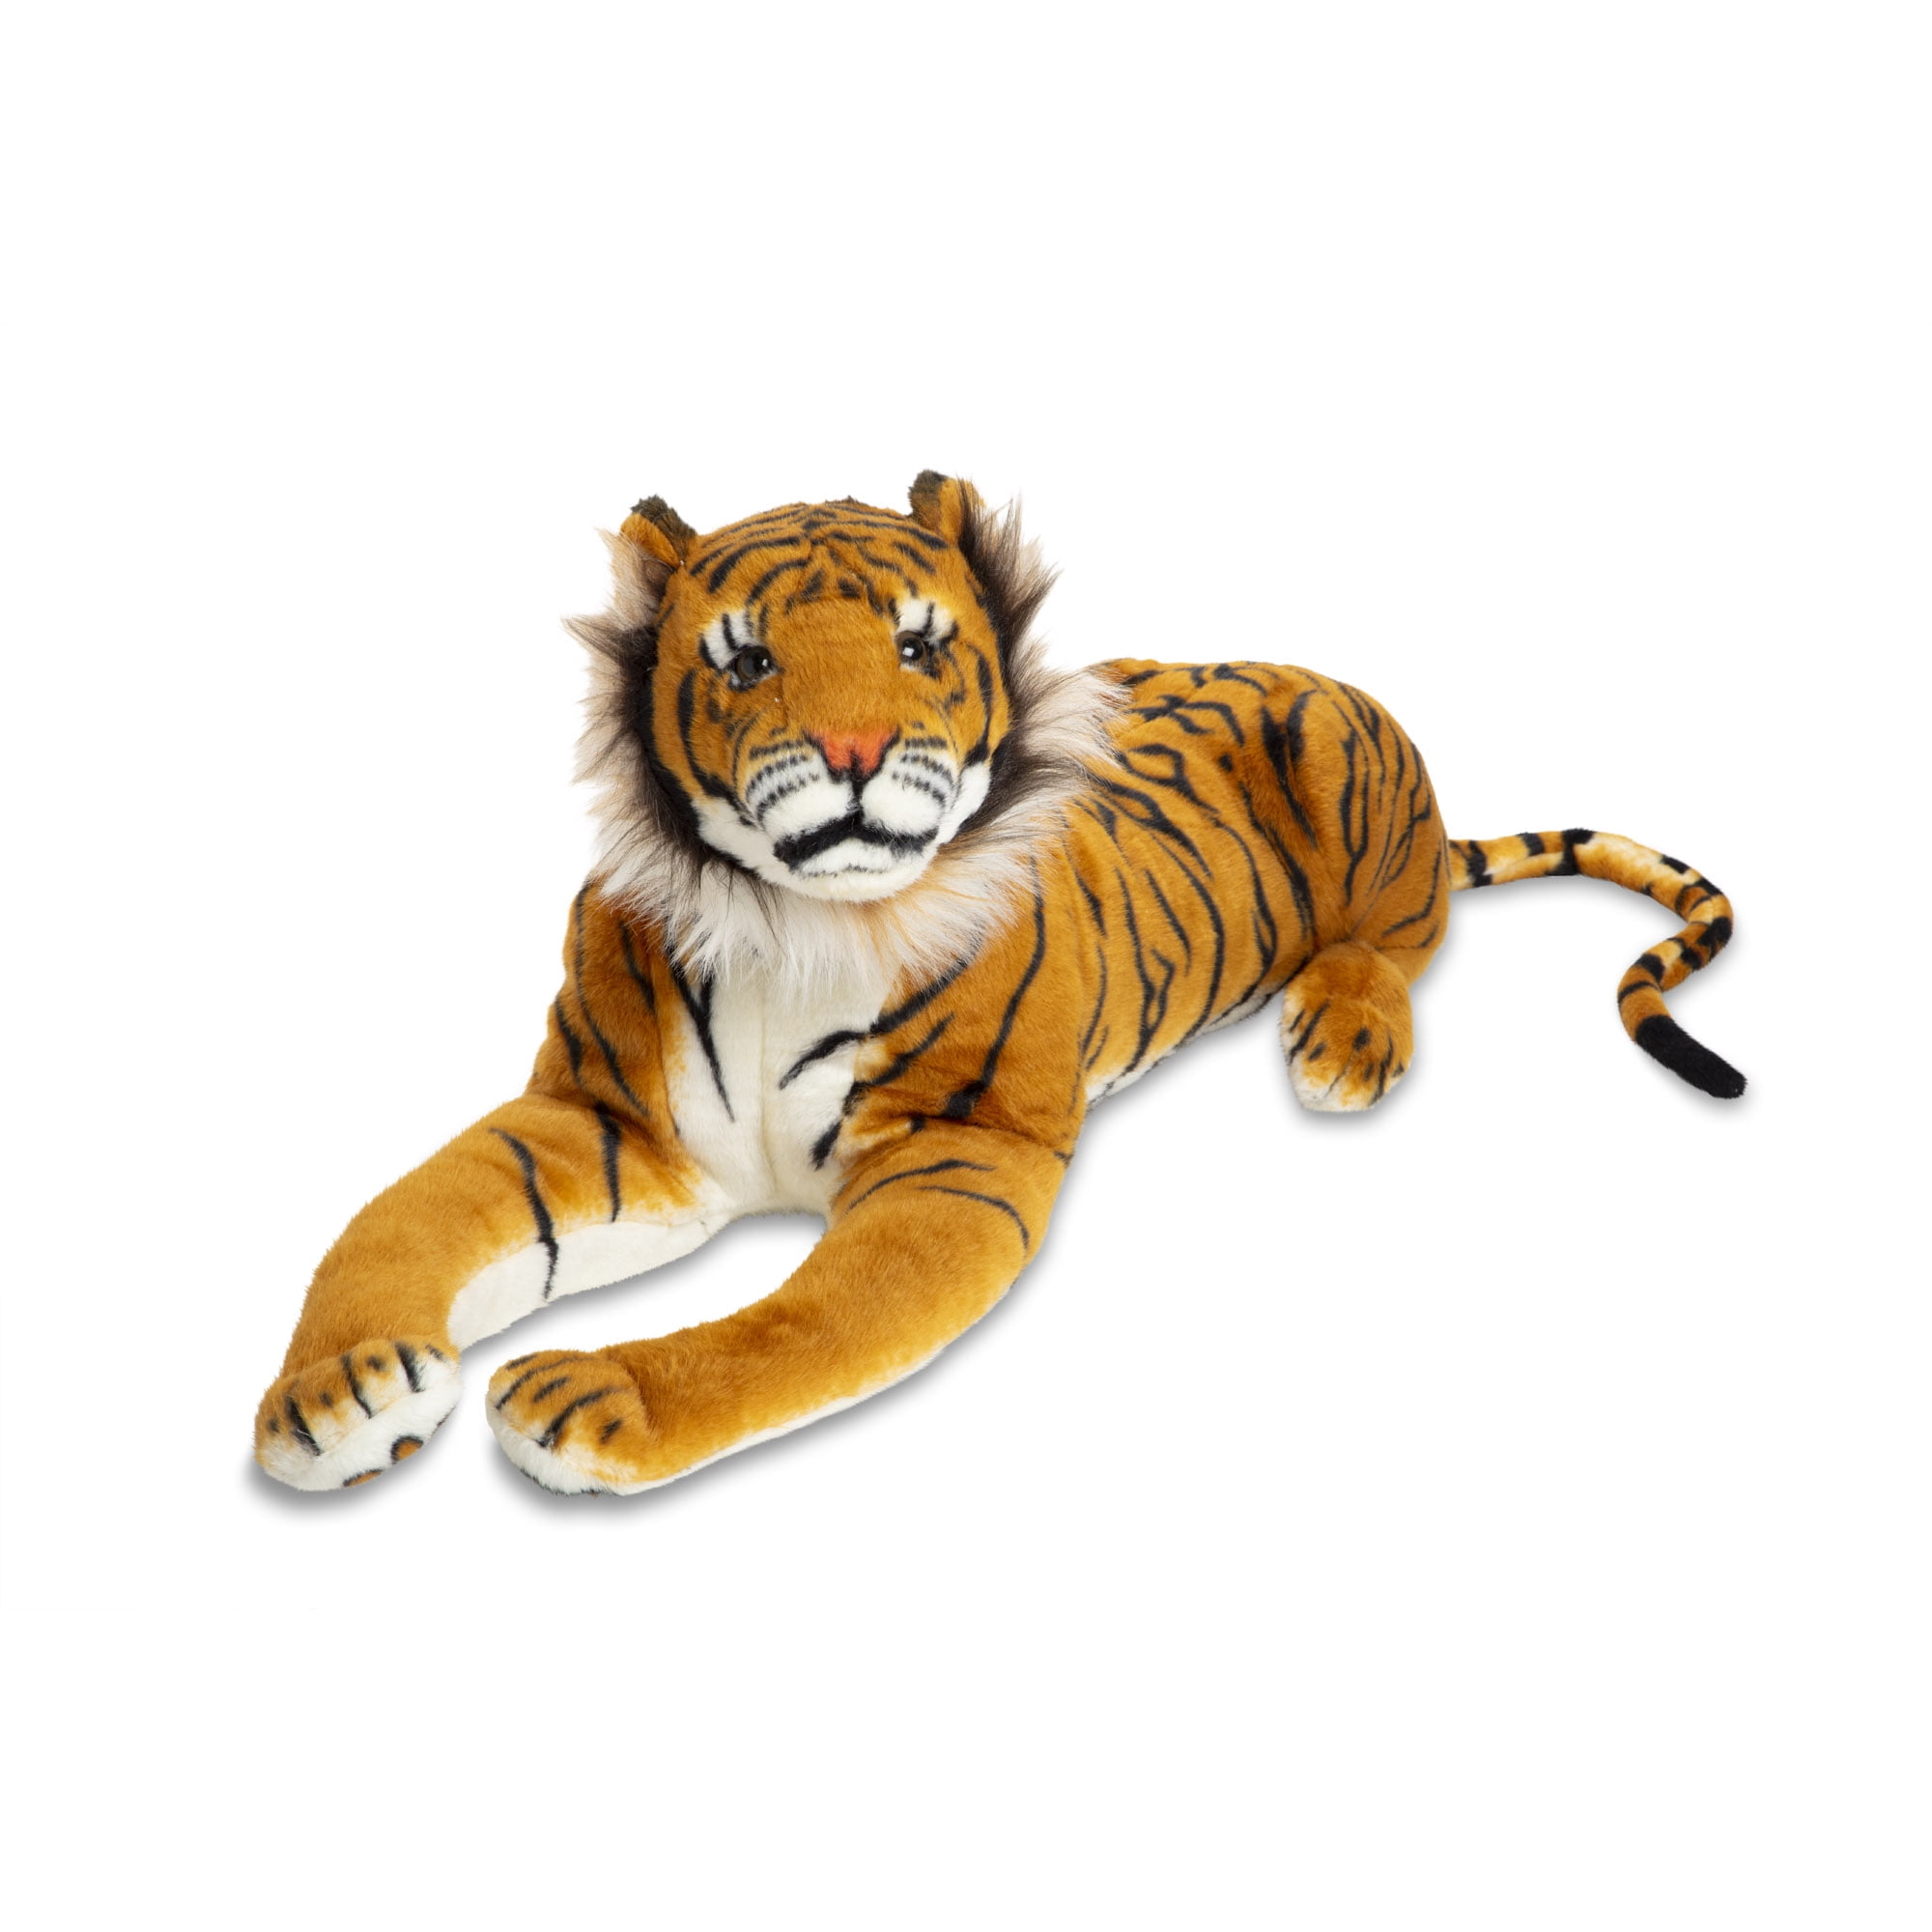 Giant Tiger Stuffed Animal Plush Soft Doll Toy Kids Cuddle Pillow Lifelike Jumbo 